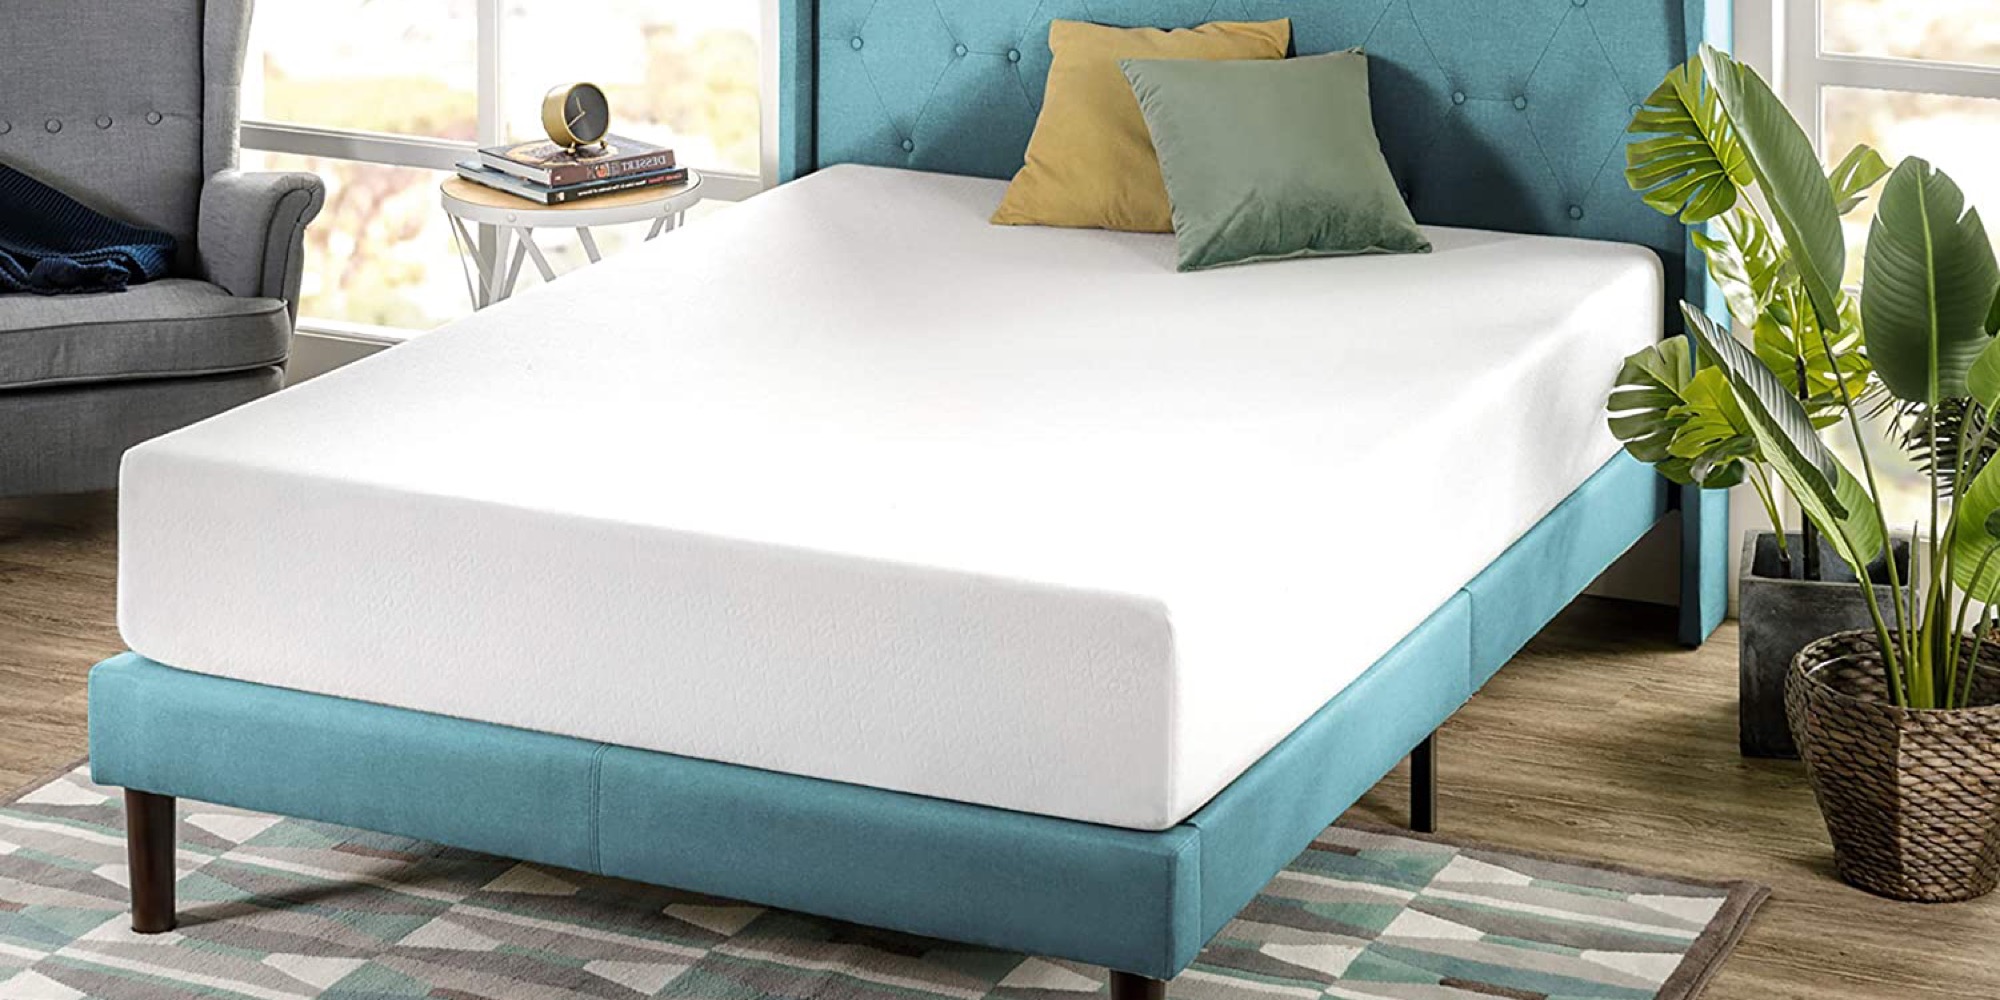 10 inch foam mattress sale